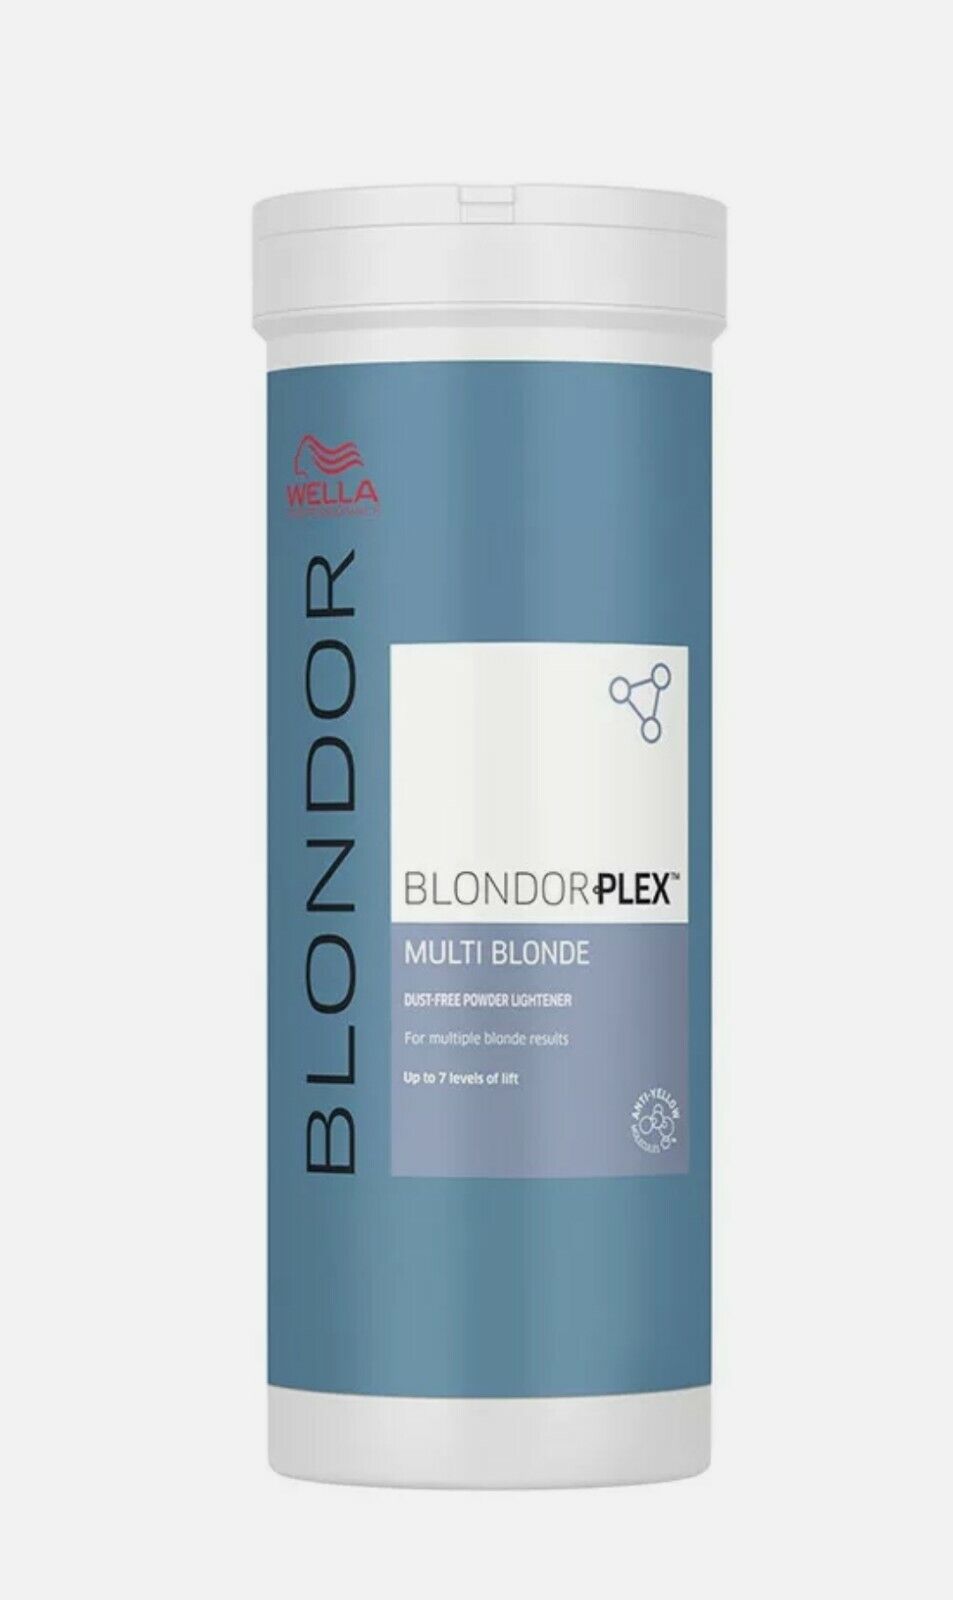 Wella Blondor Plex Multi-Blonde Dust-Free Powder Lightener Lifts 7 levels14.1 oz